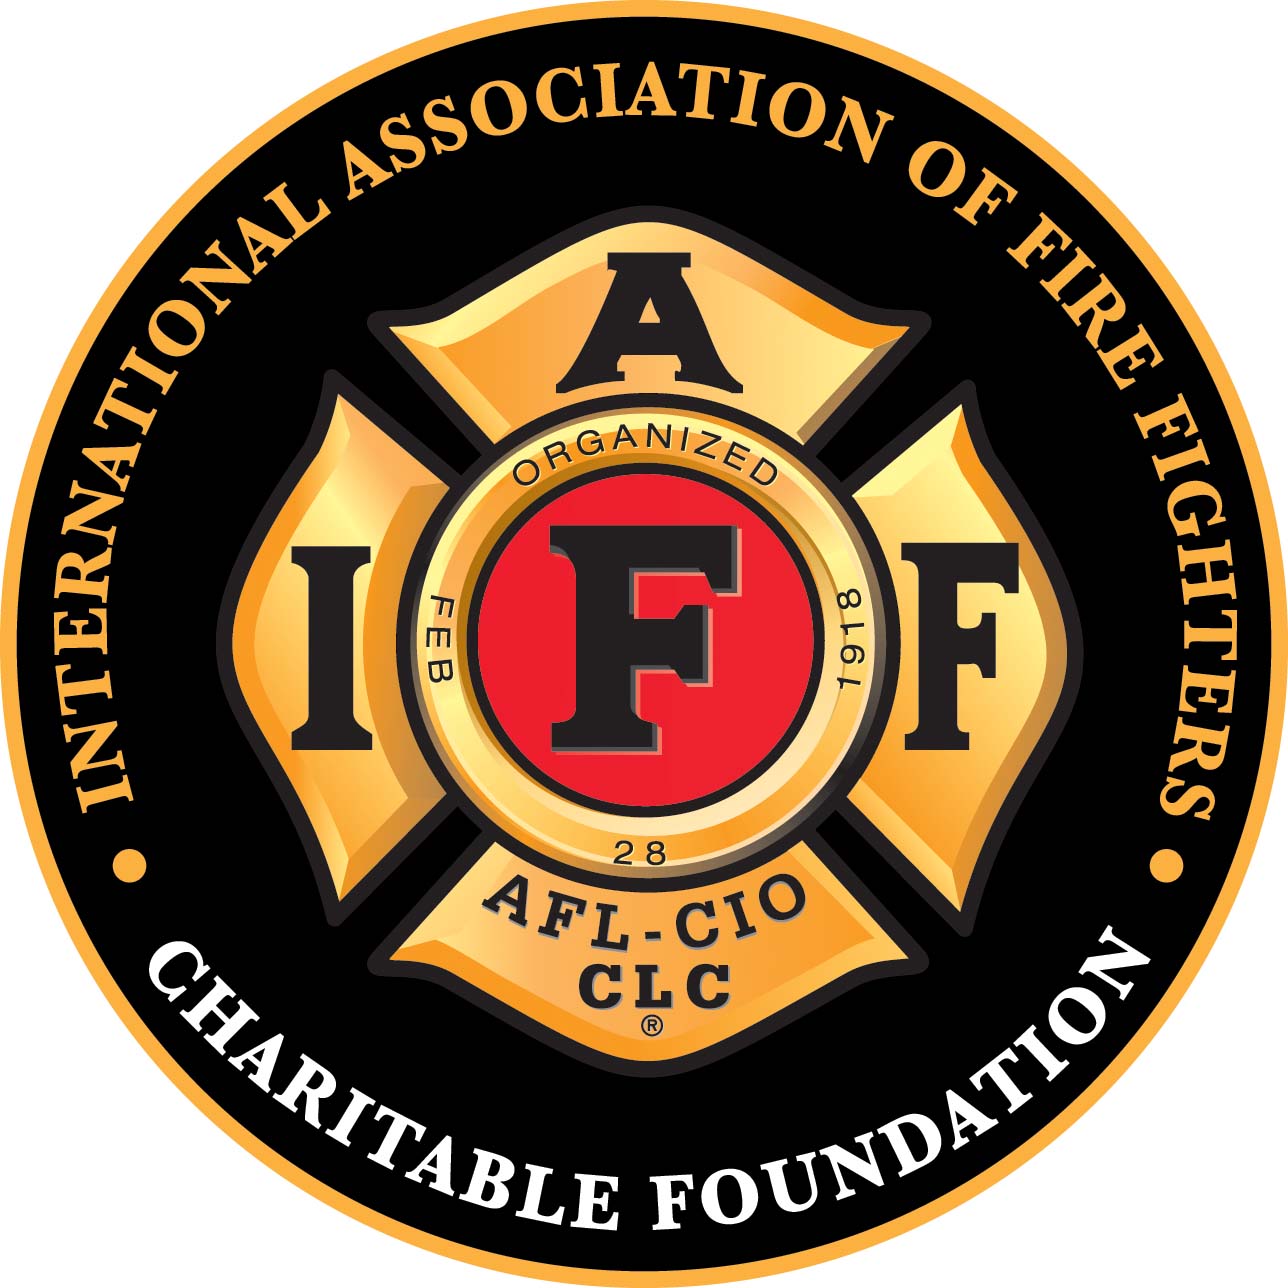 IAFF Charitable Foundation